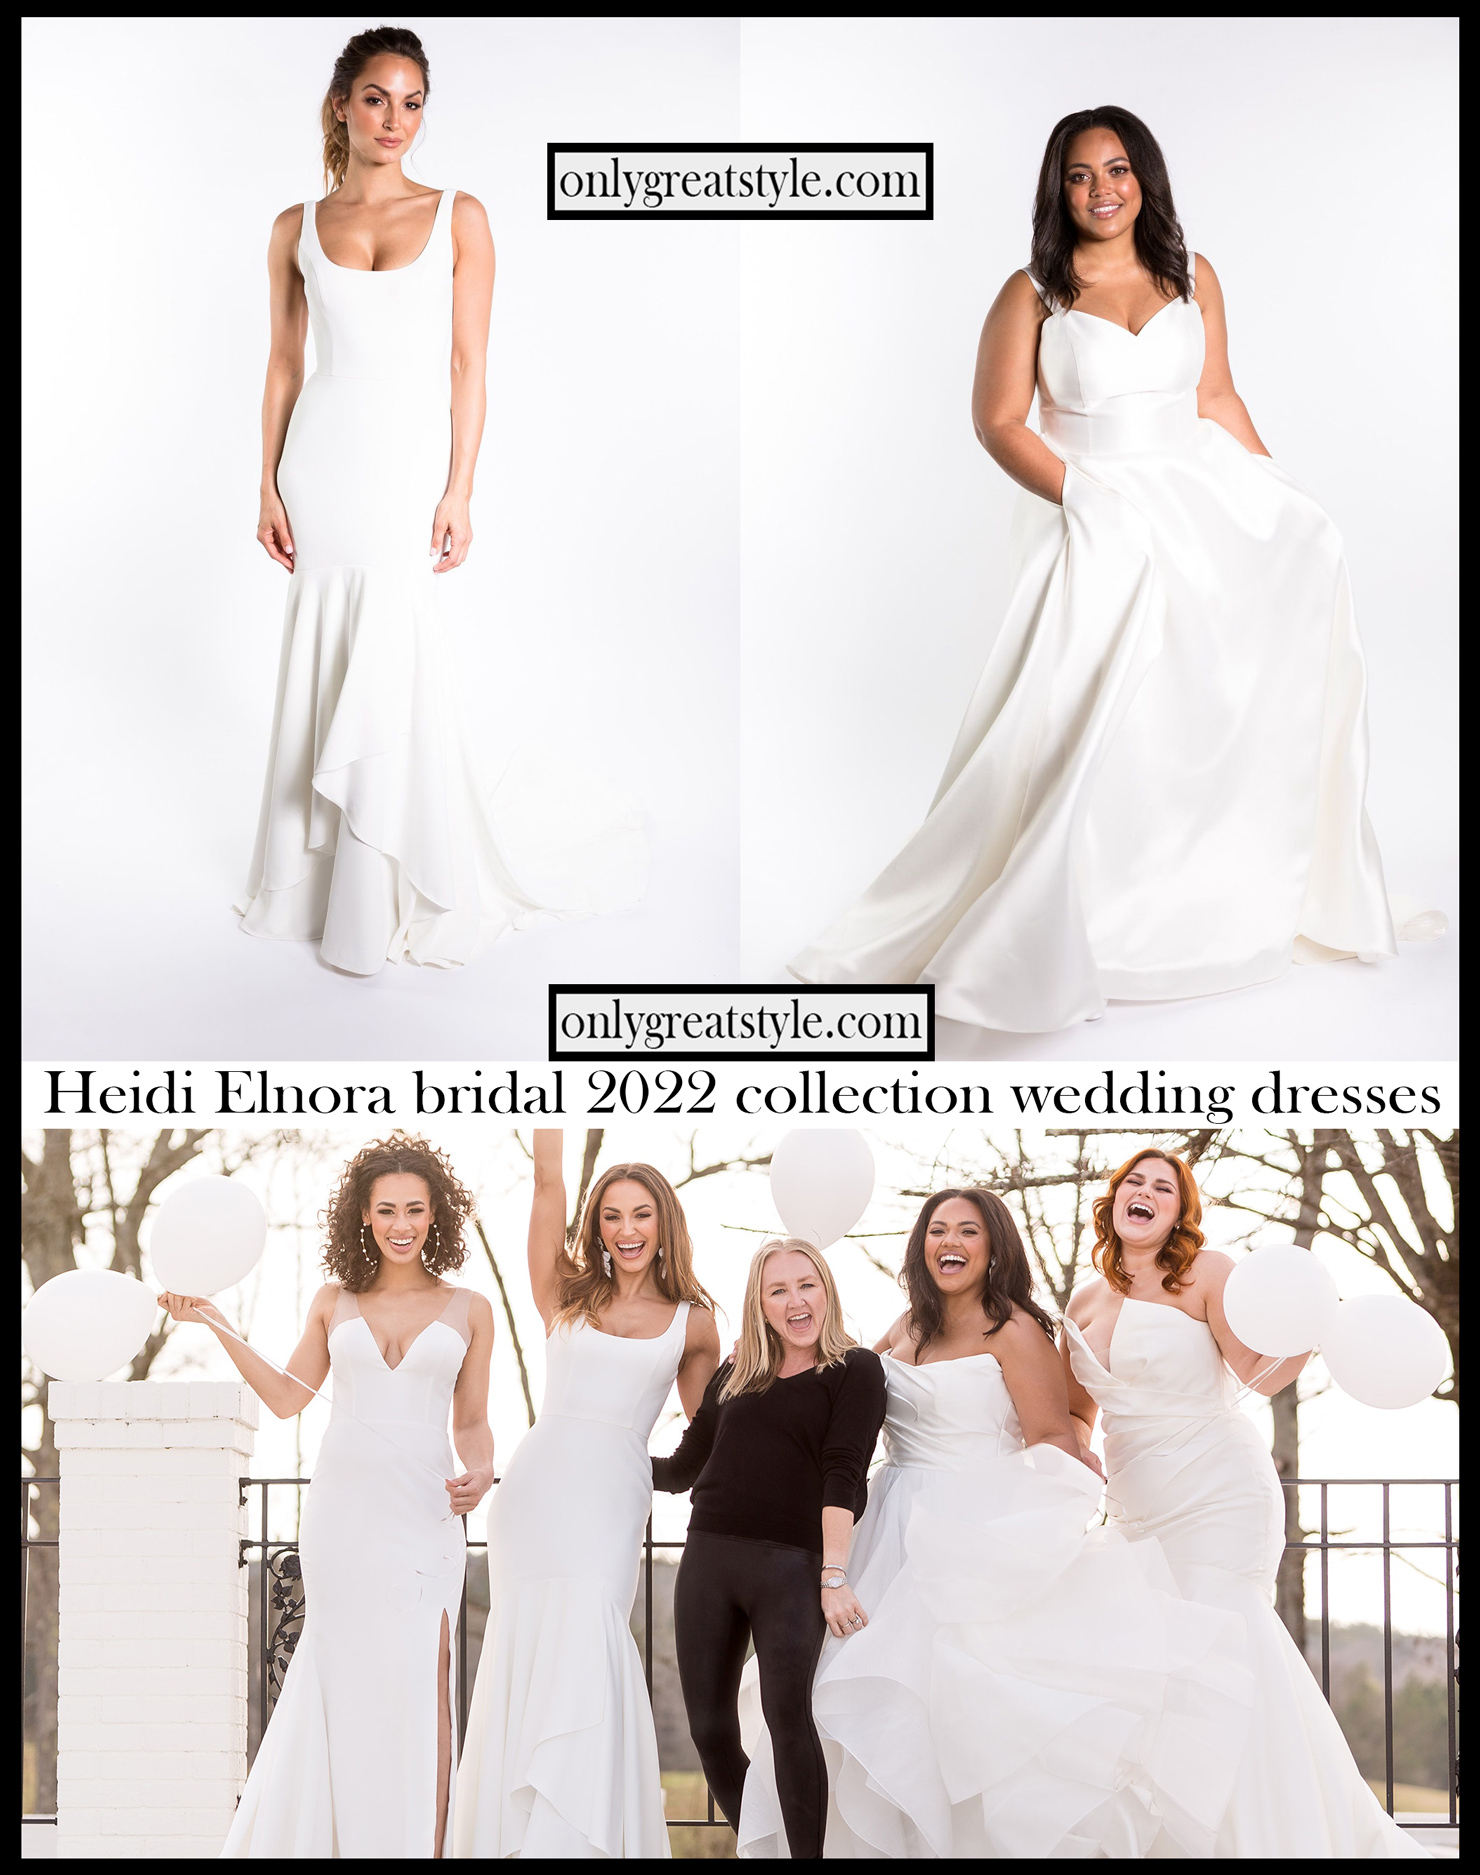 Heidi Elnora bridal 2022 collection wedding dresses